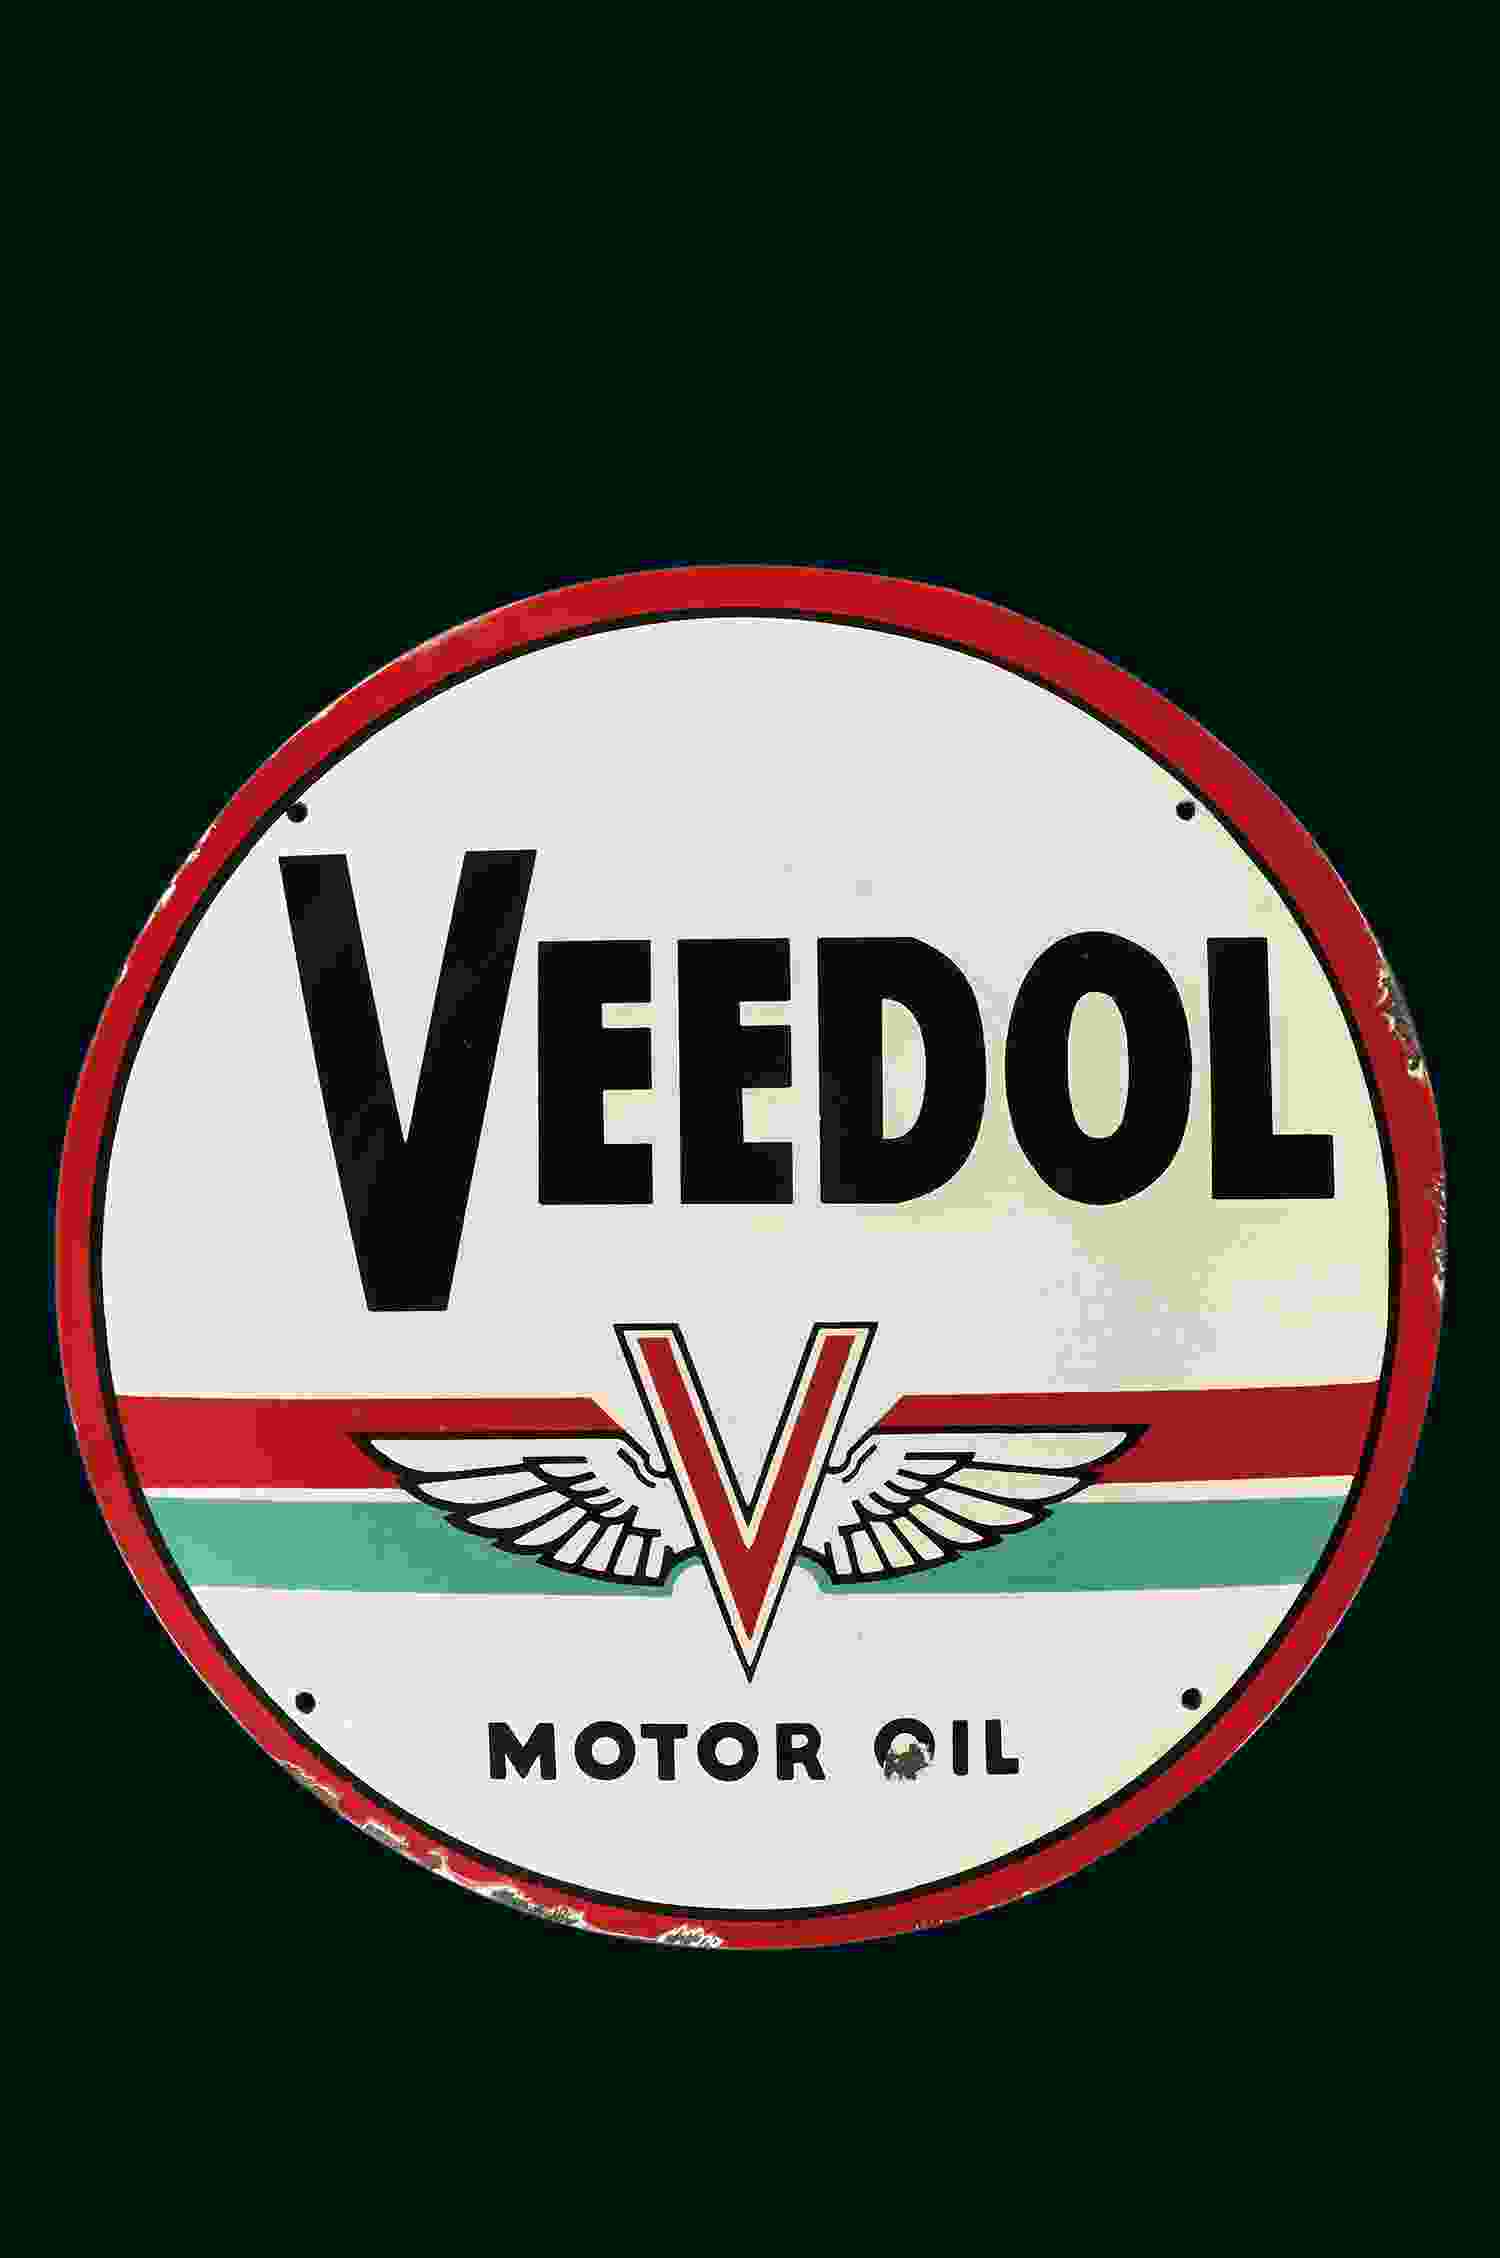 Veedol Motor Oil  